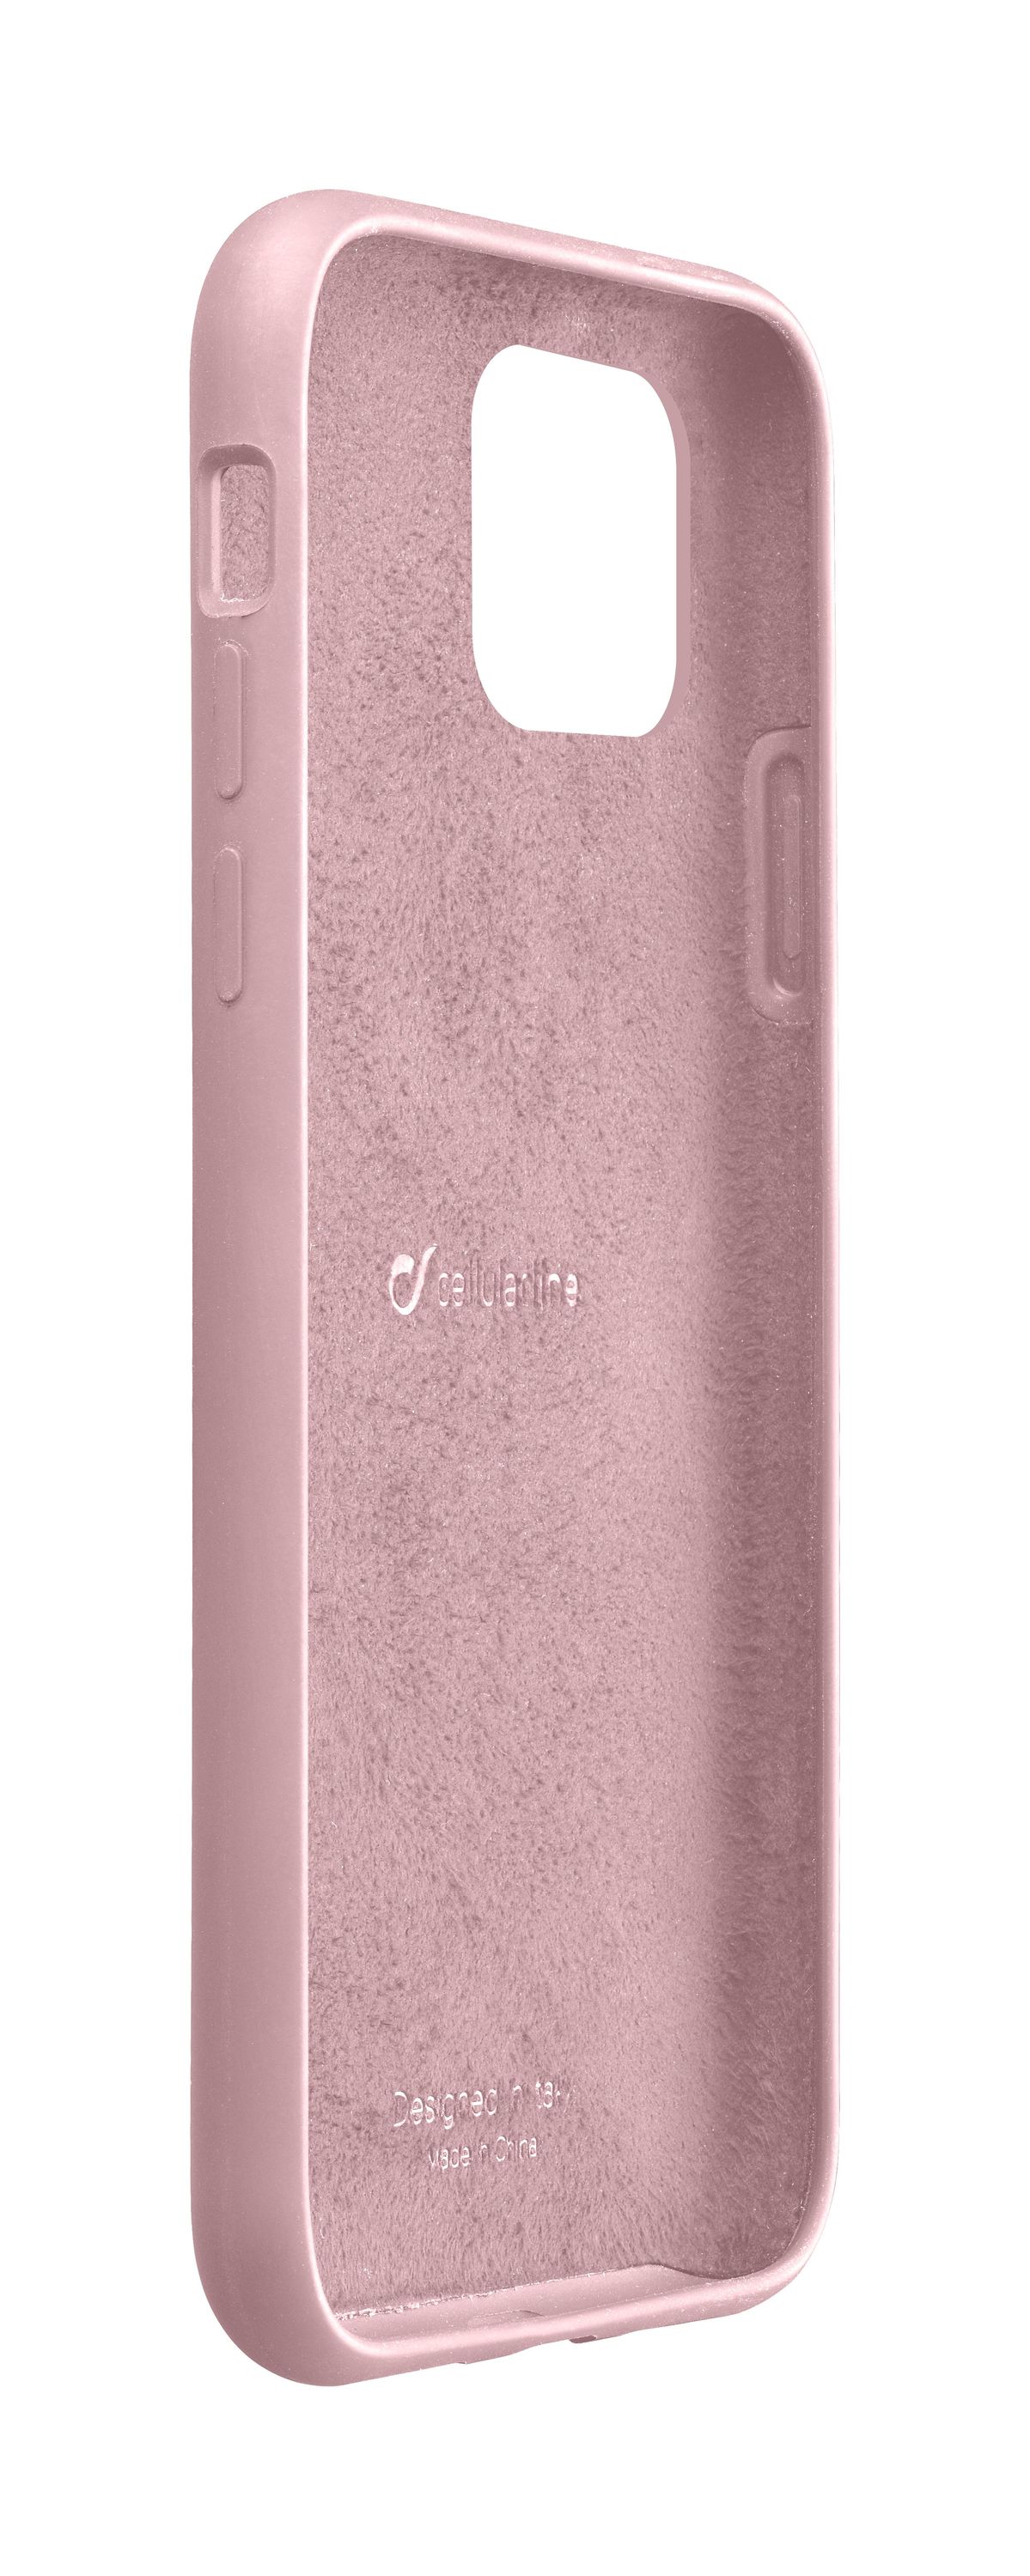 iPhone 11 Pro, case sensation, pink